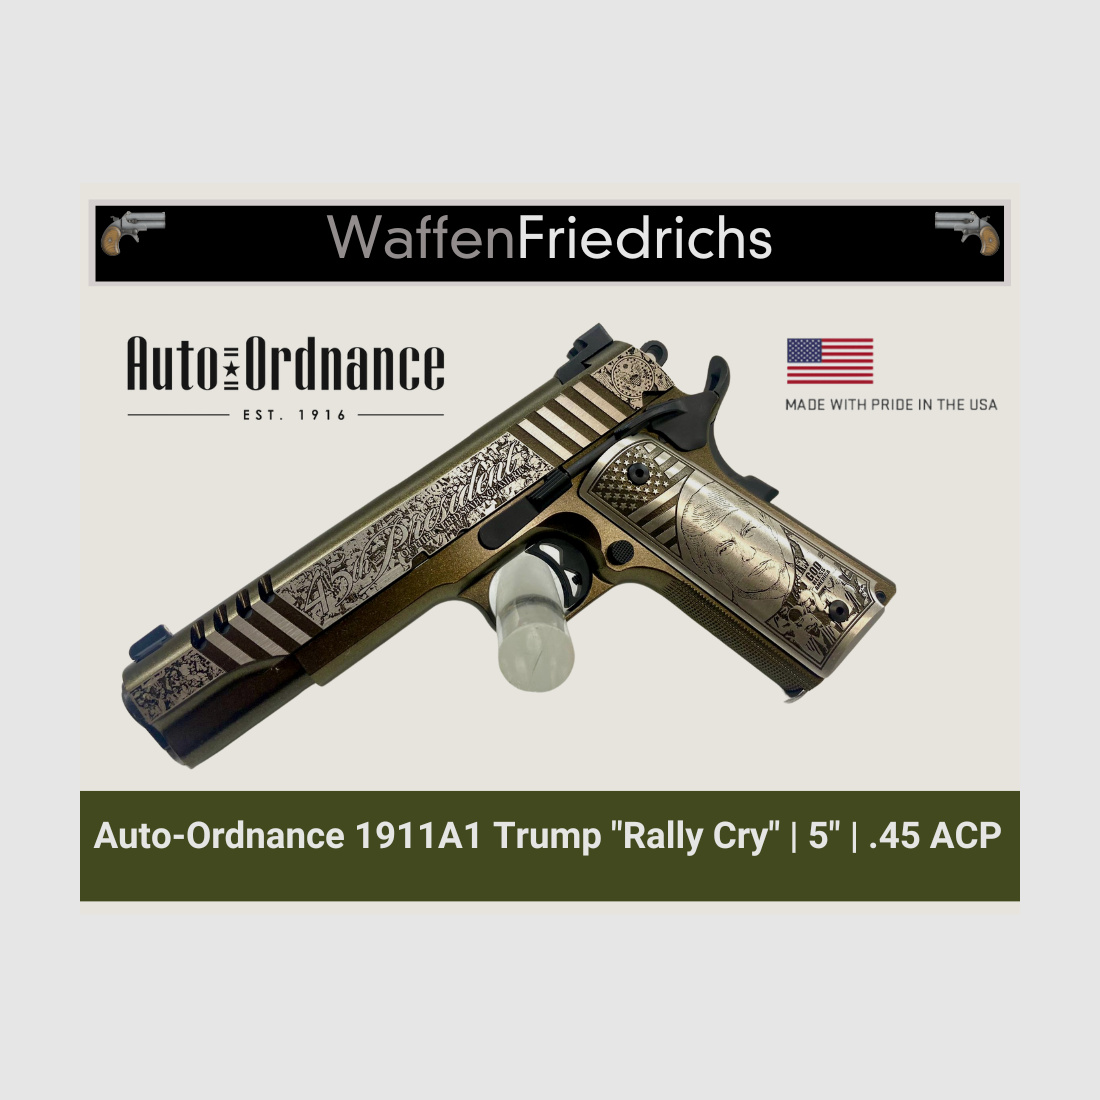 Auto-Ordnance 1911 A1 Trump 5" Rally Cry - LIMITED EDITION- WaffenFriedrichs